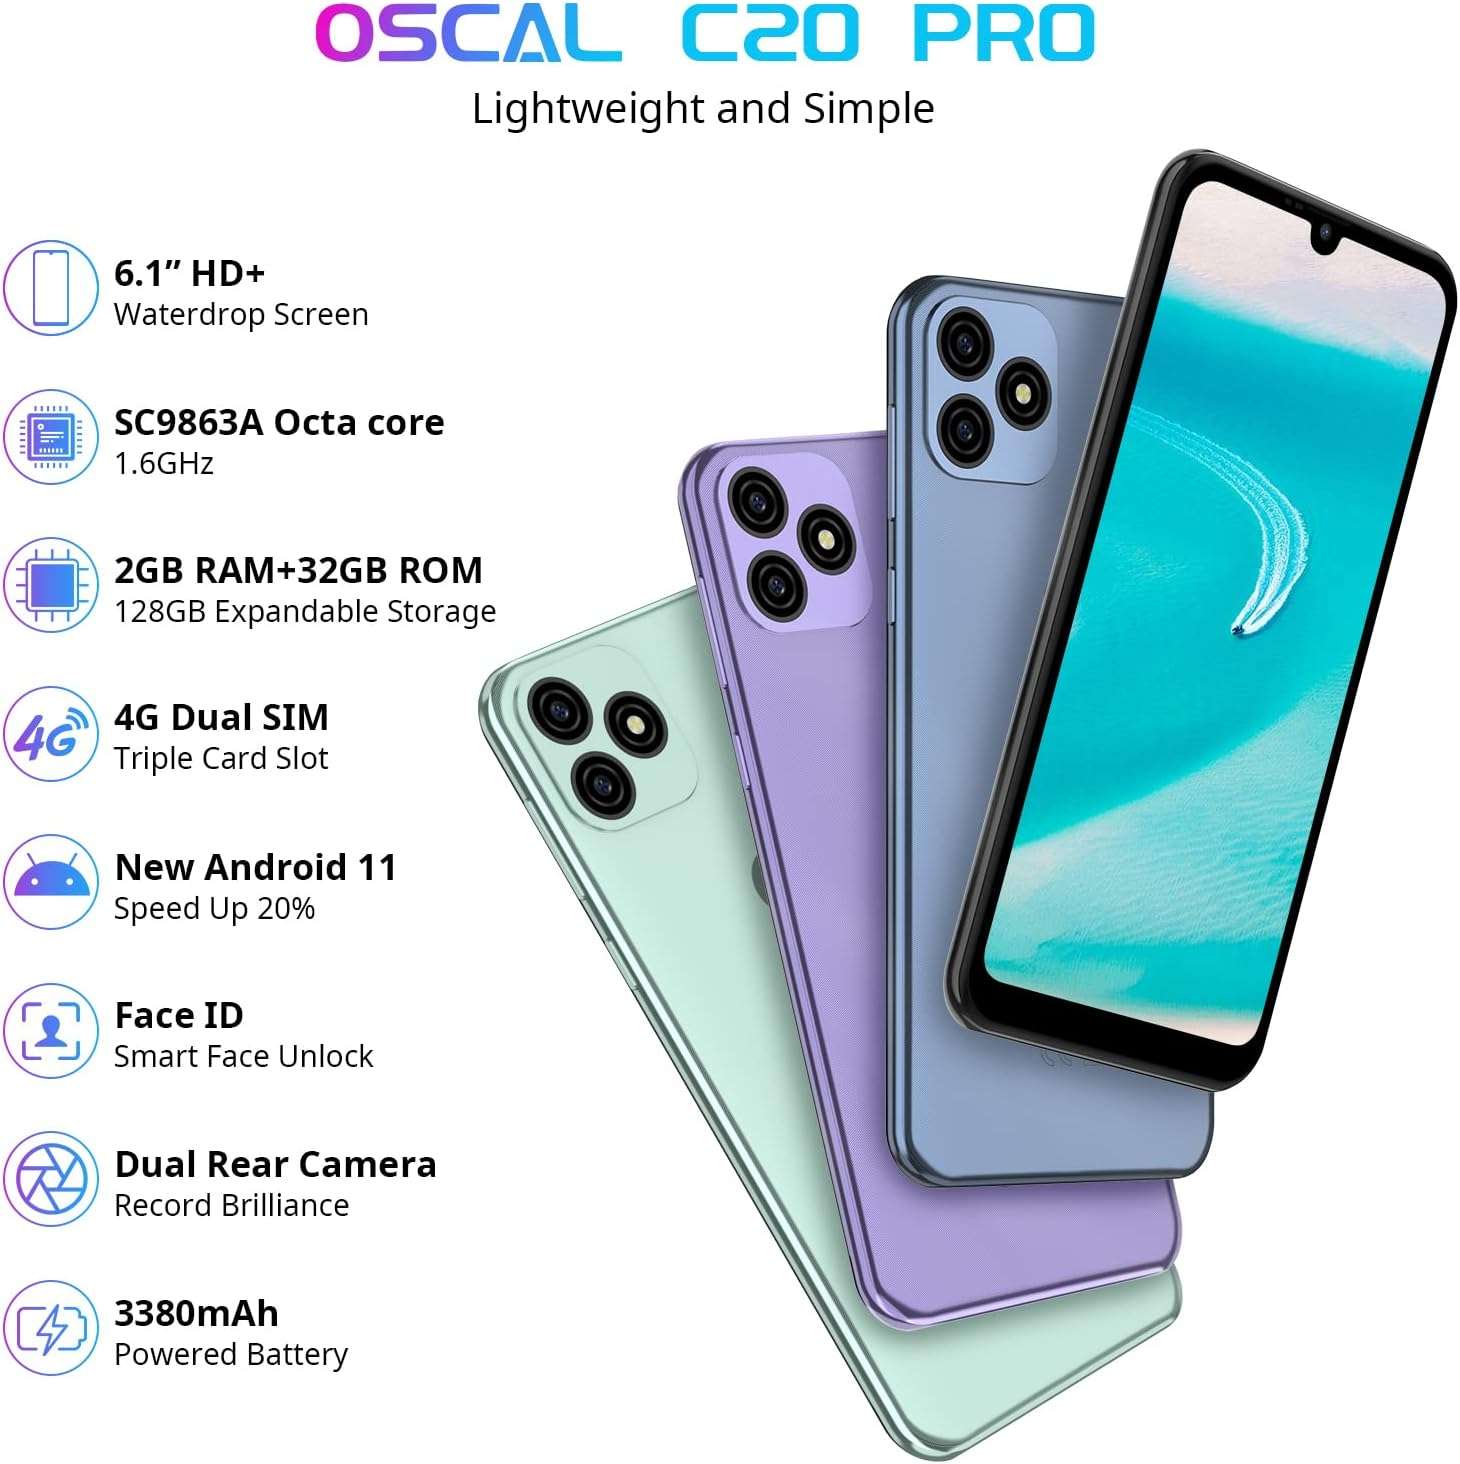 smartphone oscal c20 pro